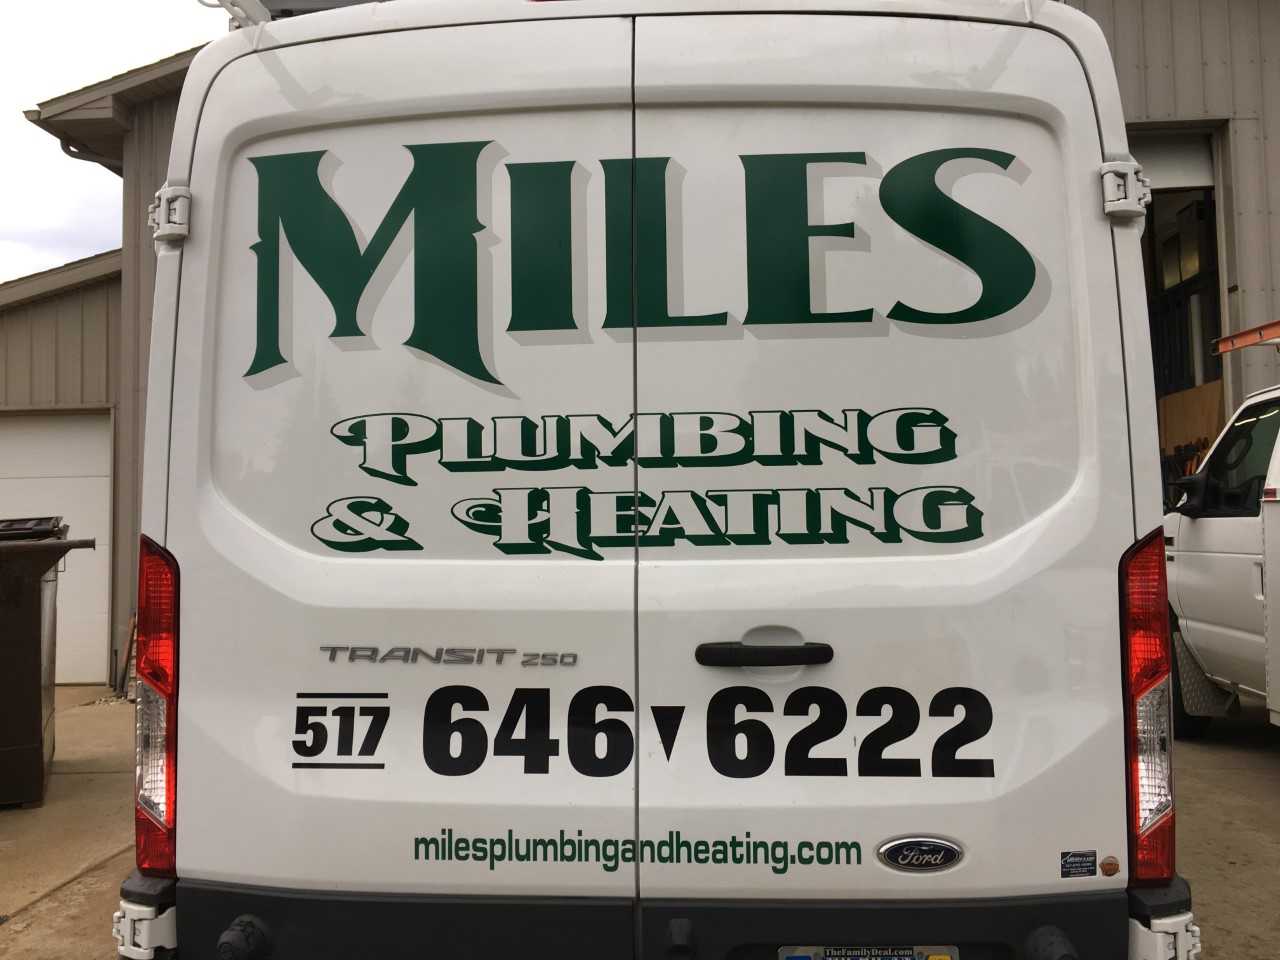 Miles Plumbing and Heating